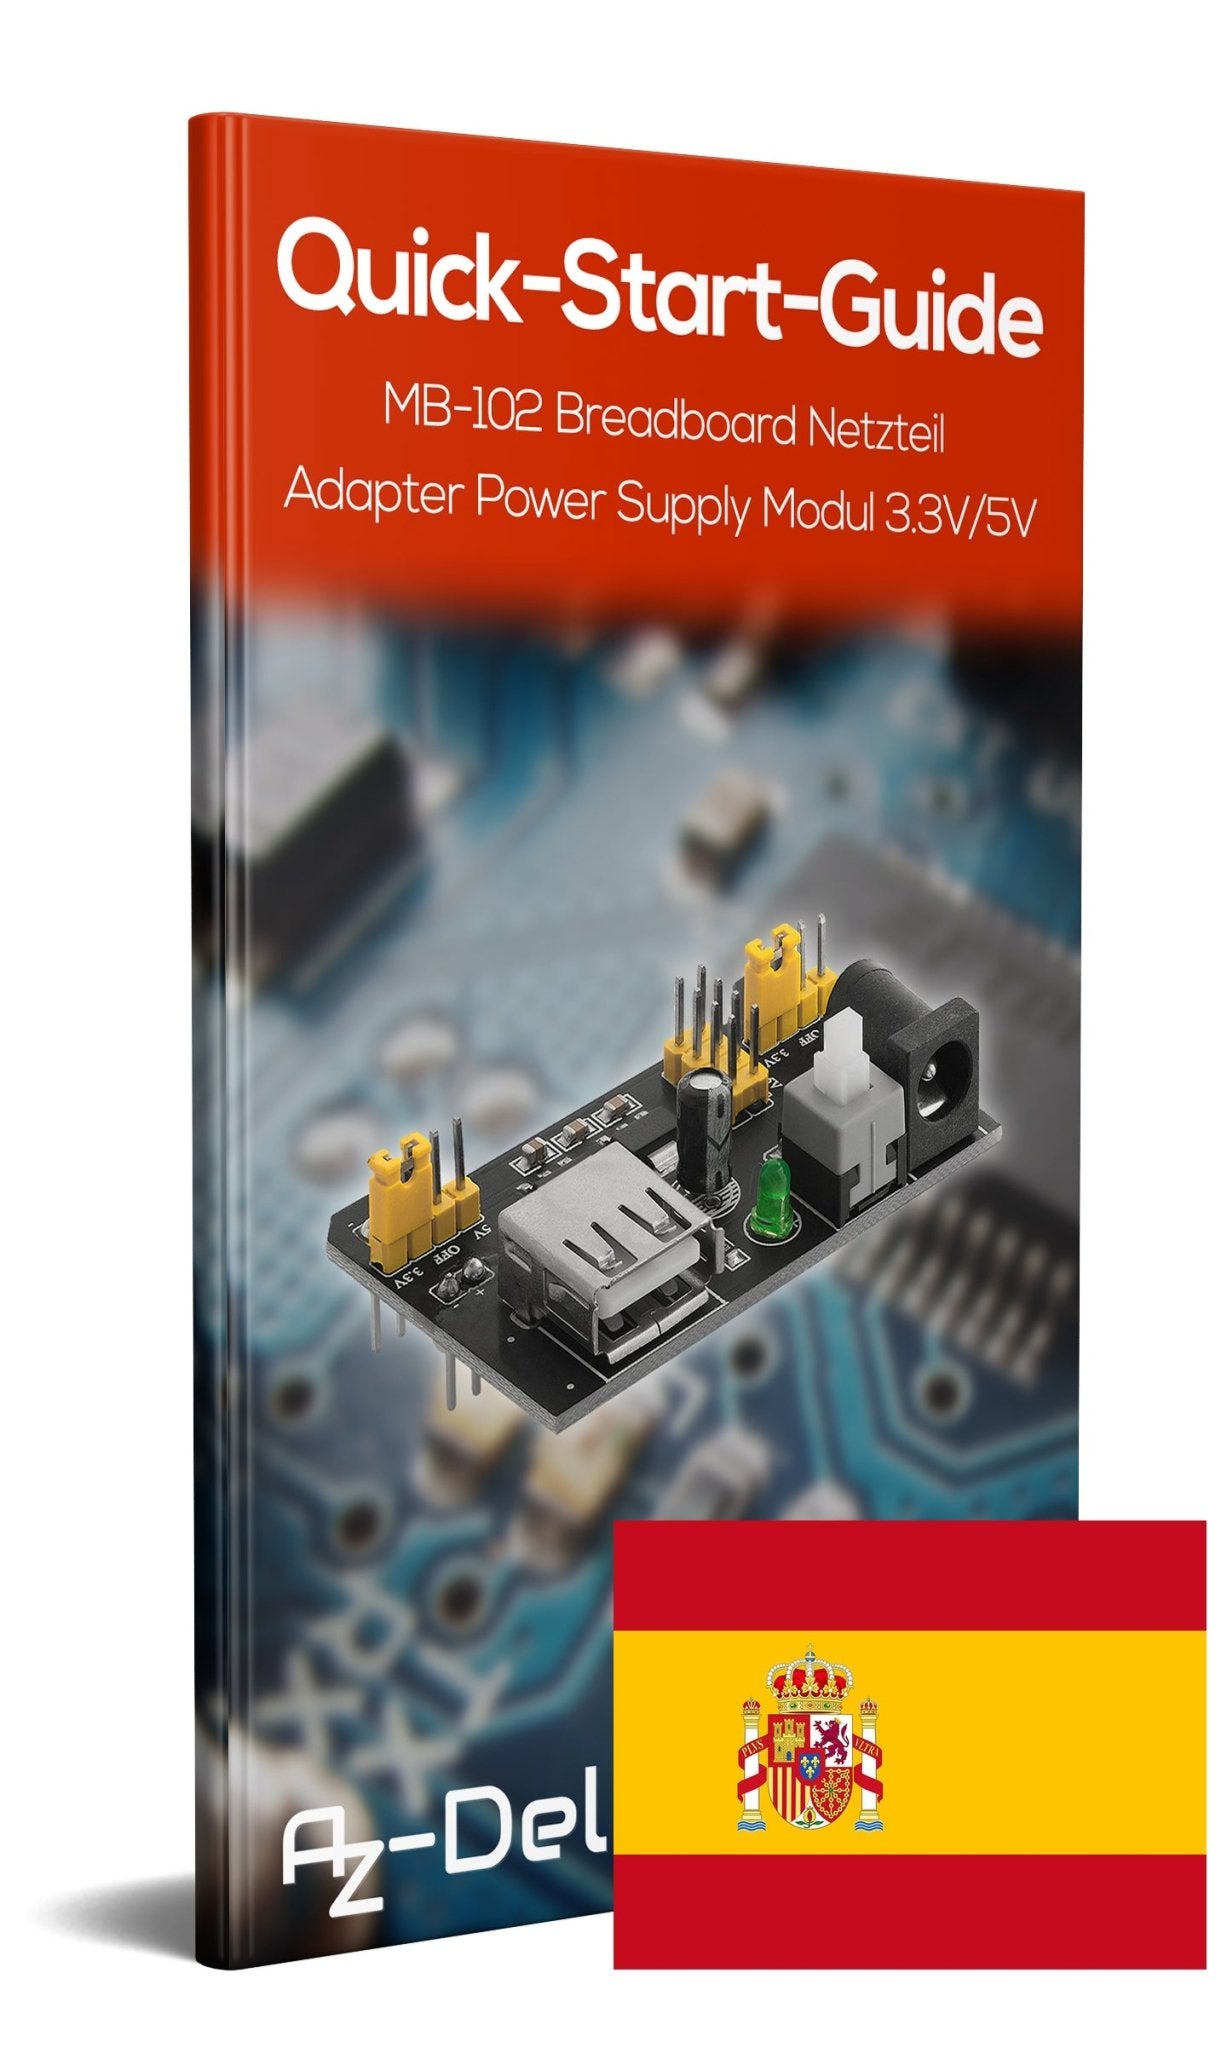 MB102 Breadboard Netzteil Adapter Power Supply Modul 3.3V/5V - AZ-Delivery